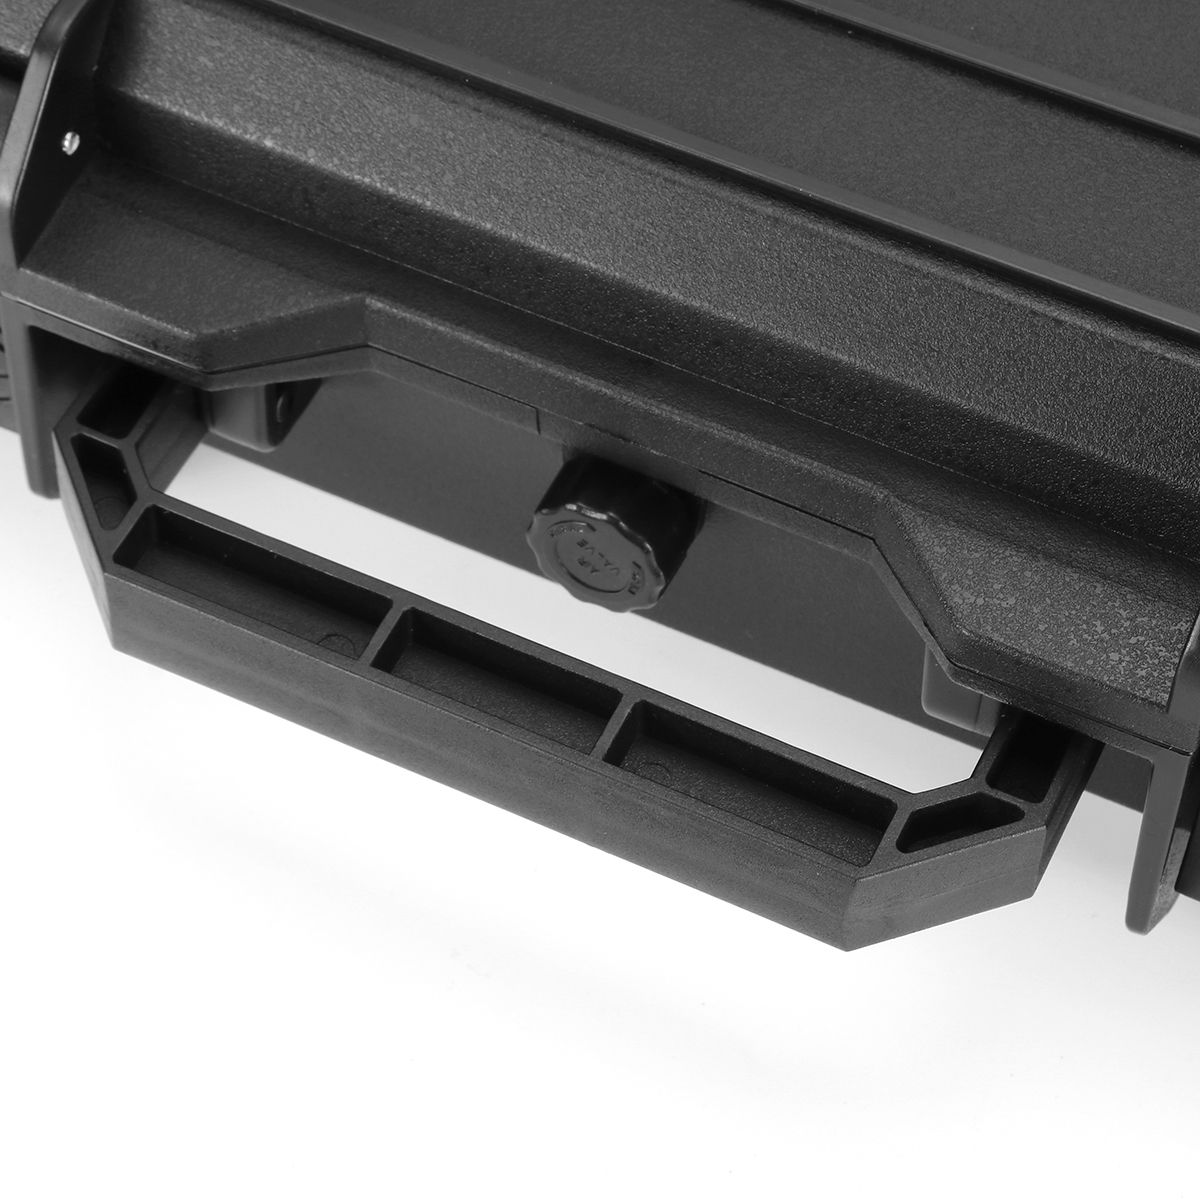 Waterproof-Hard-Carry-Case-Tool-Kits-Impact-Resistant-Shockproof-Storage-Box-New-1658756